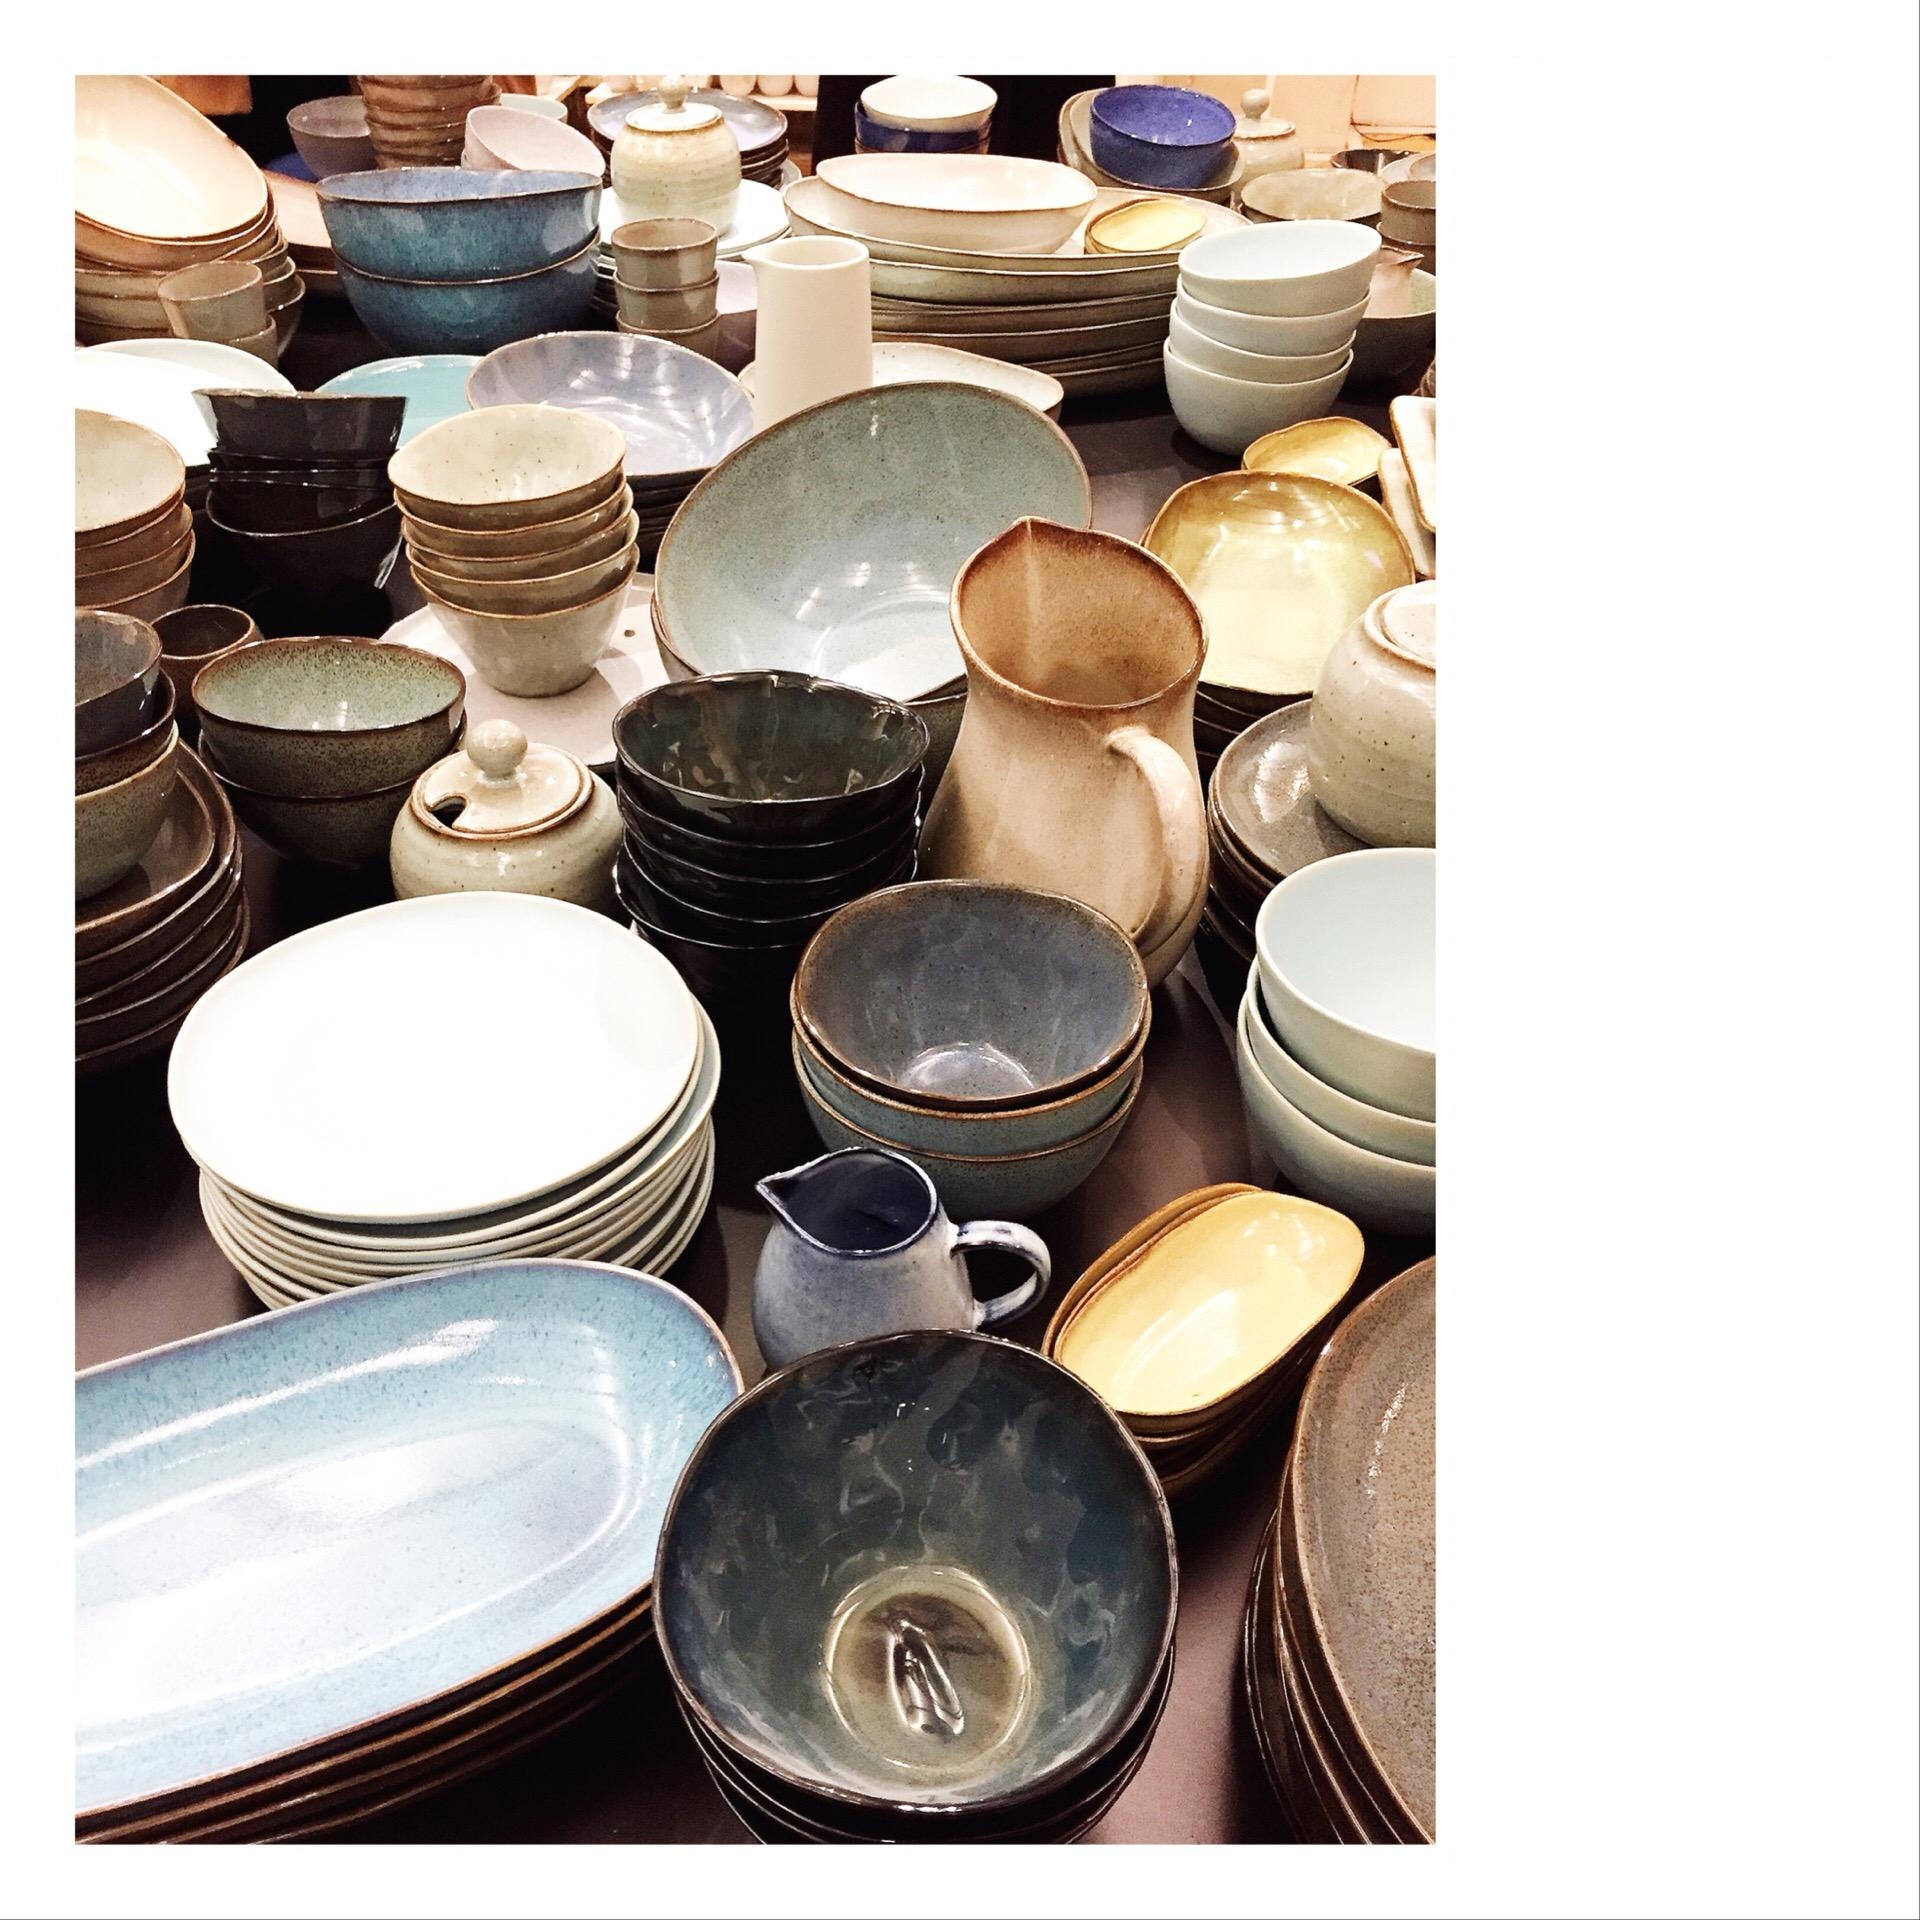 #pottery #Stoneware #ceramic #newin #interiorinspiration #interior #love